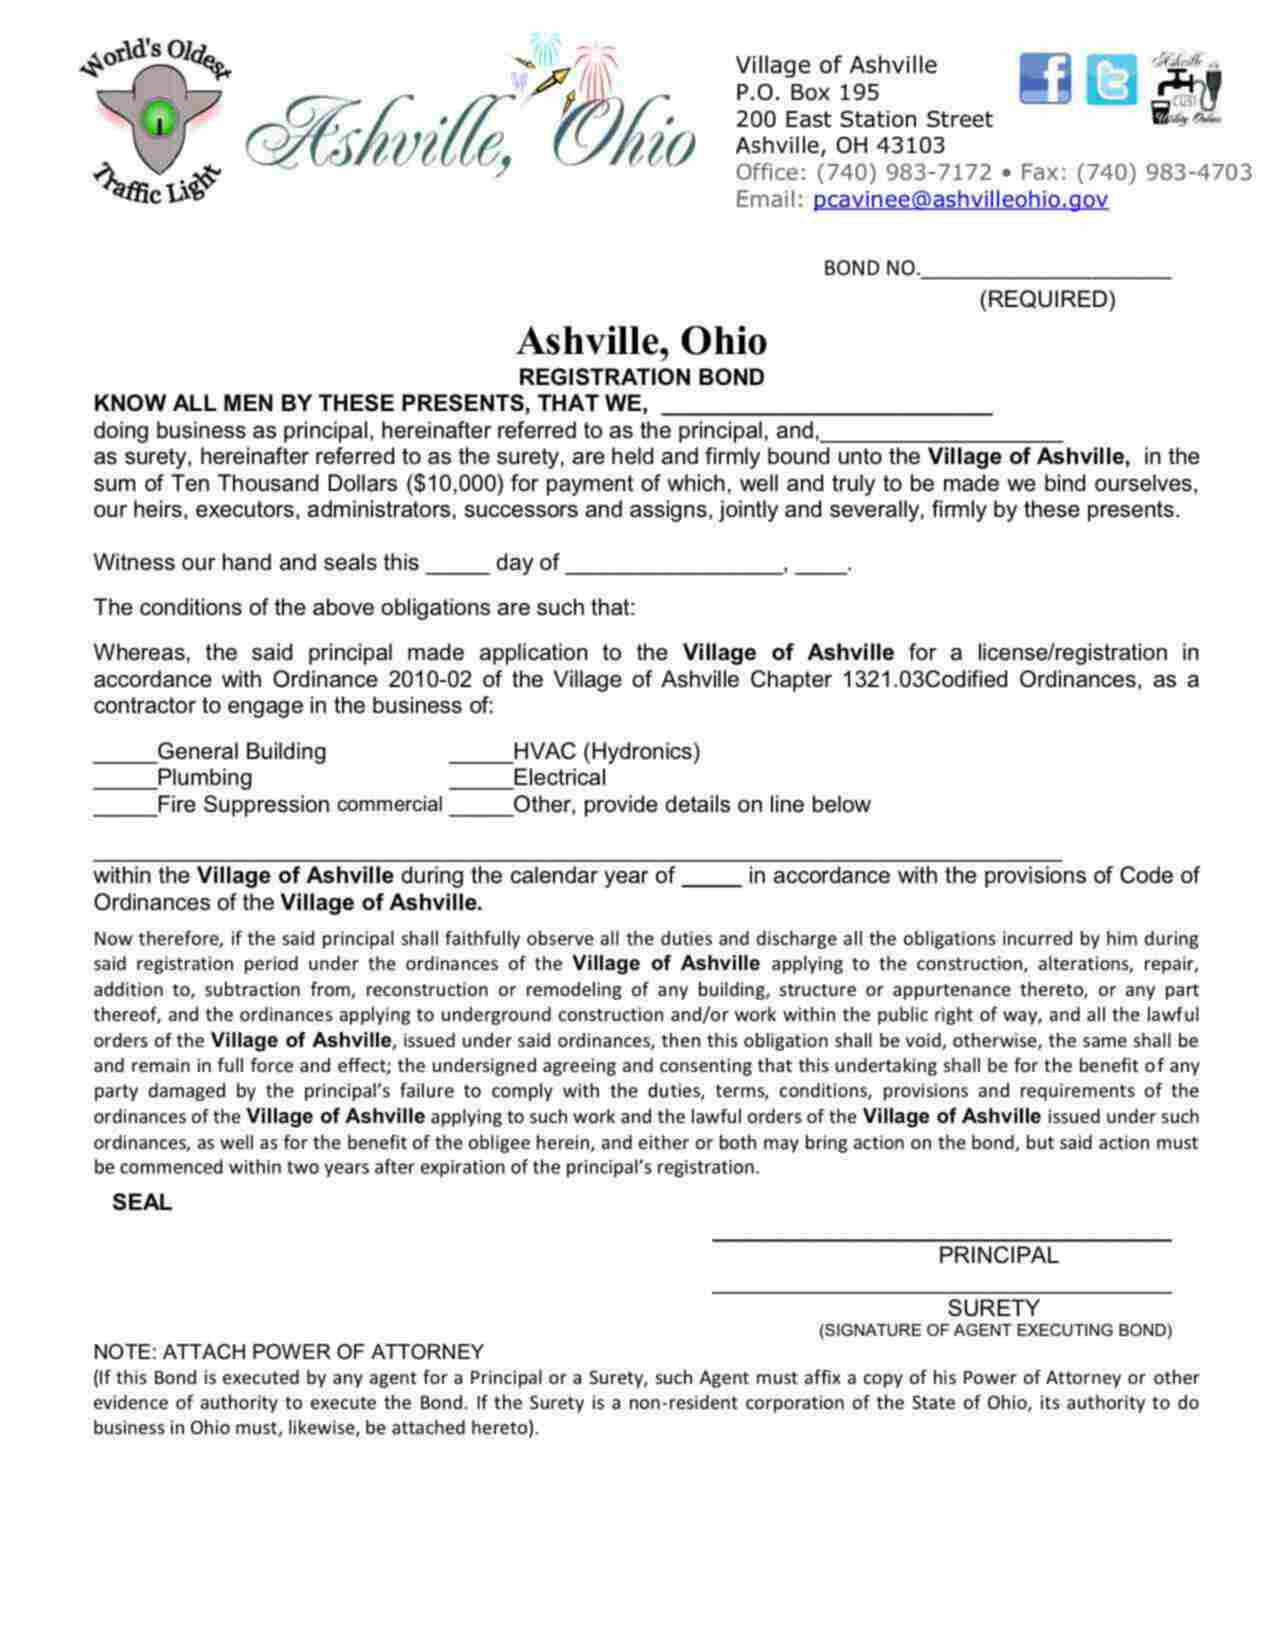 Ohio Registration - Fire Suppression Bond Form